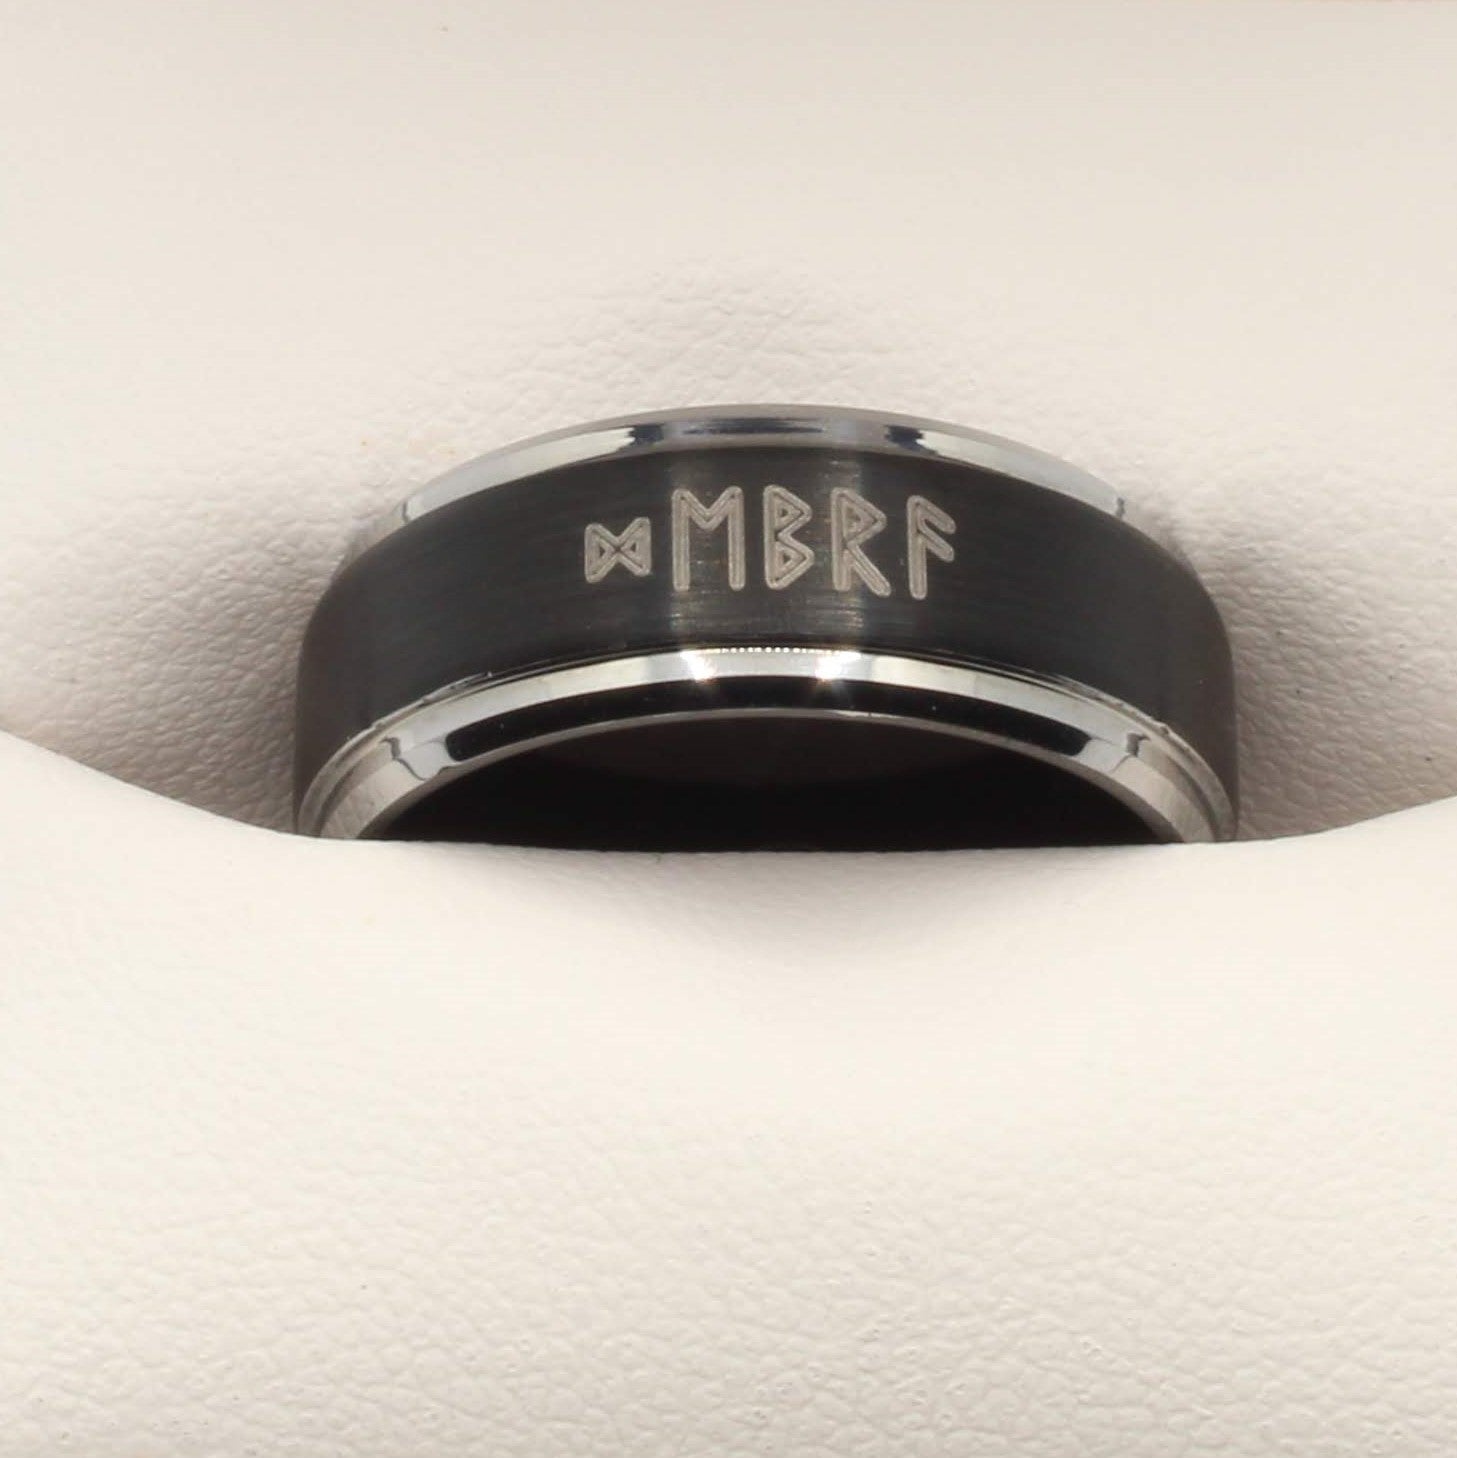 Personalised Viking Rune Wonder Ring